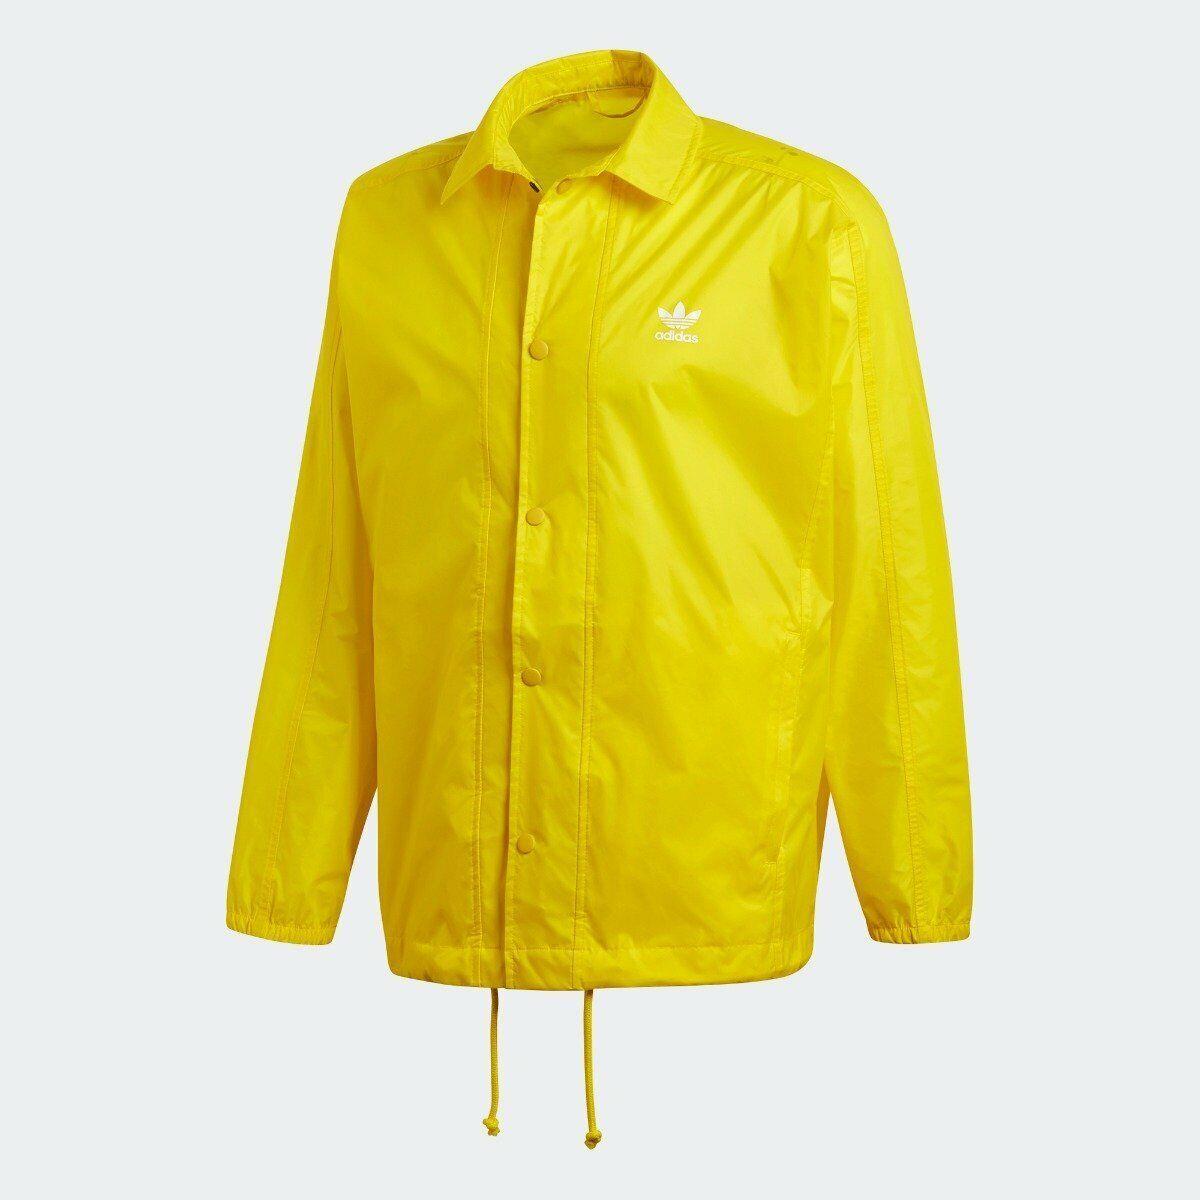 Mens Adidas Originals Trefoil Coach Jacket Yellow CW1315 L XL Xxl 100%AUTHENTIC